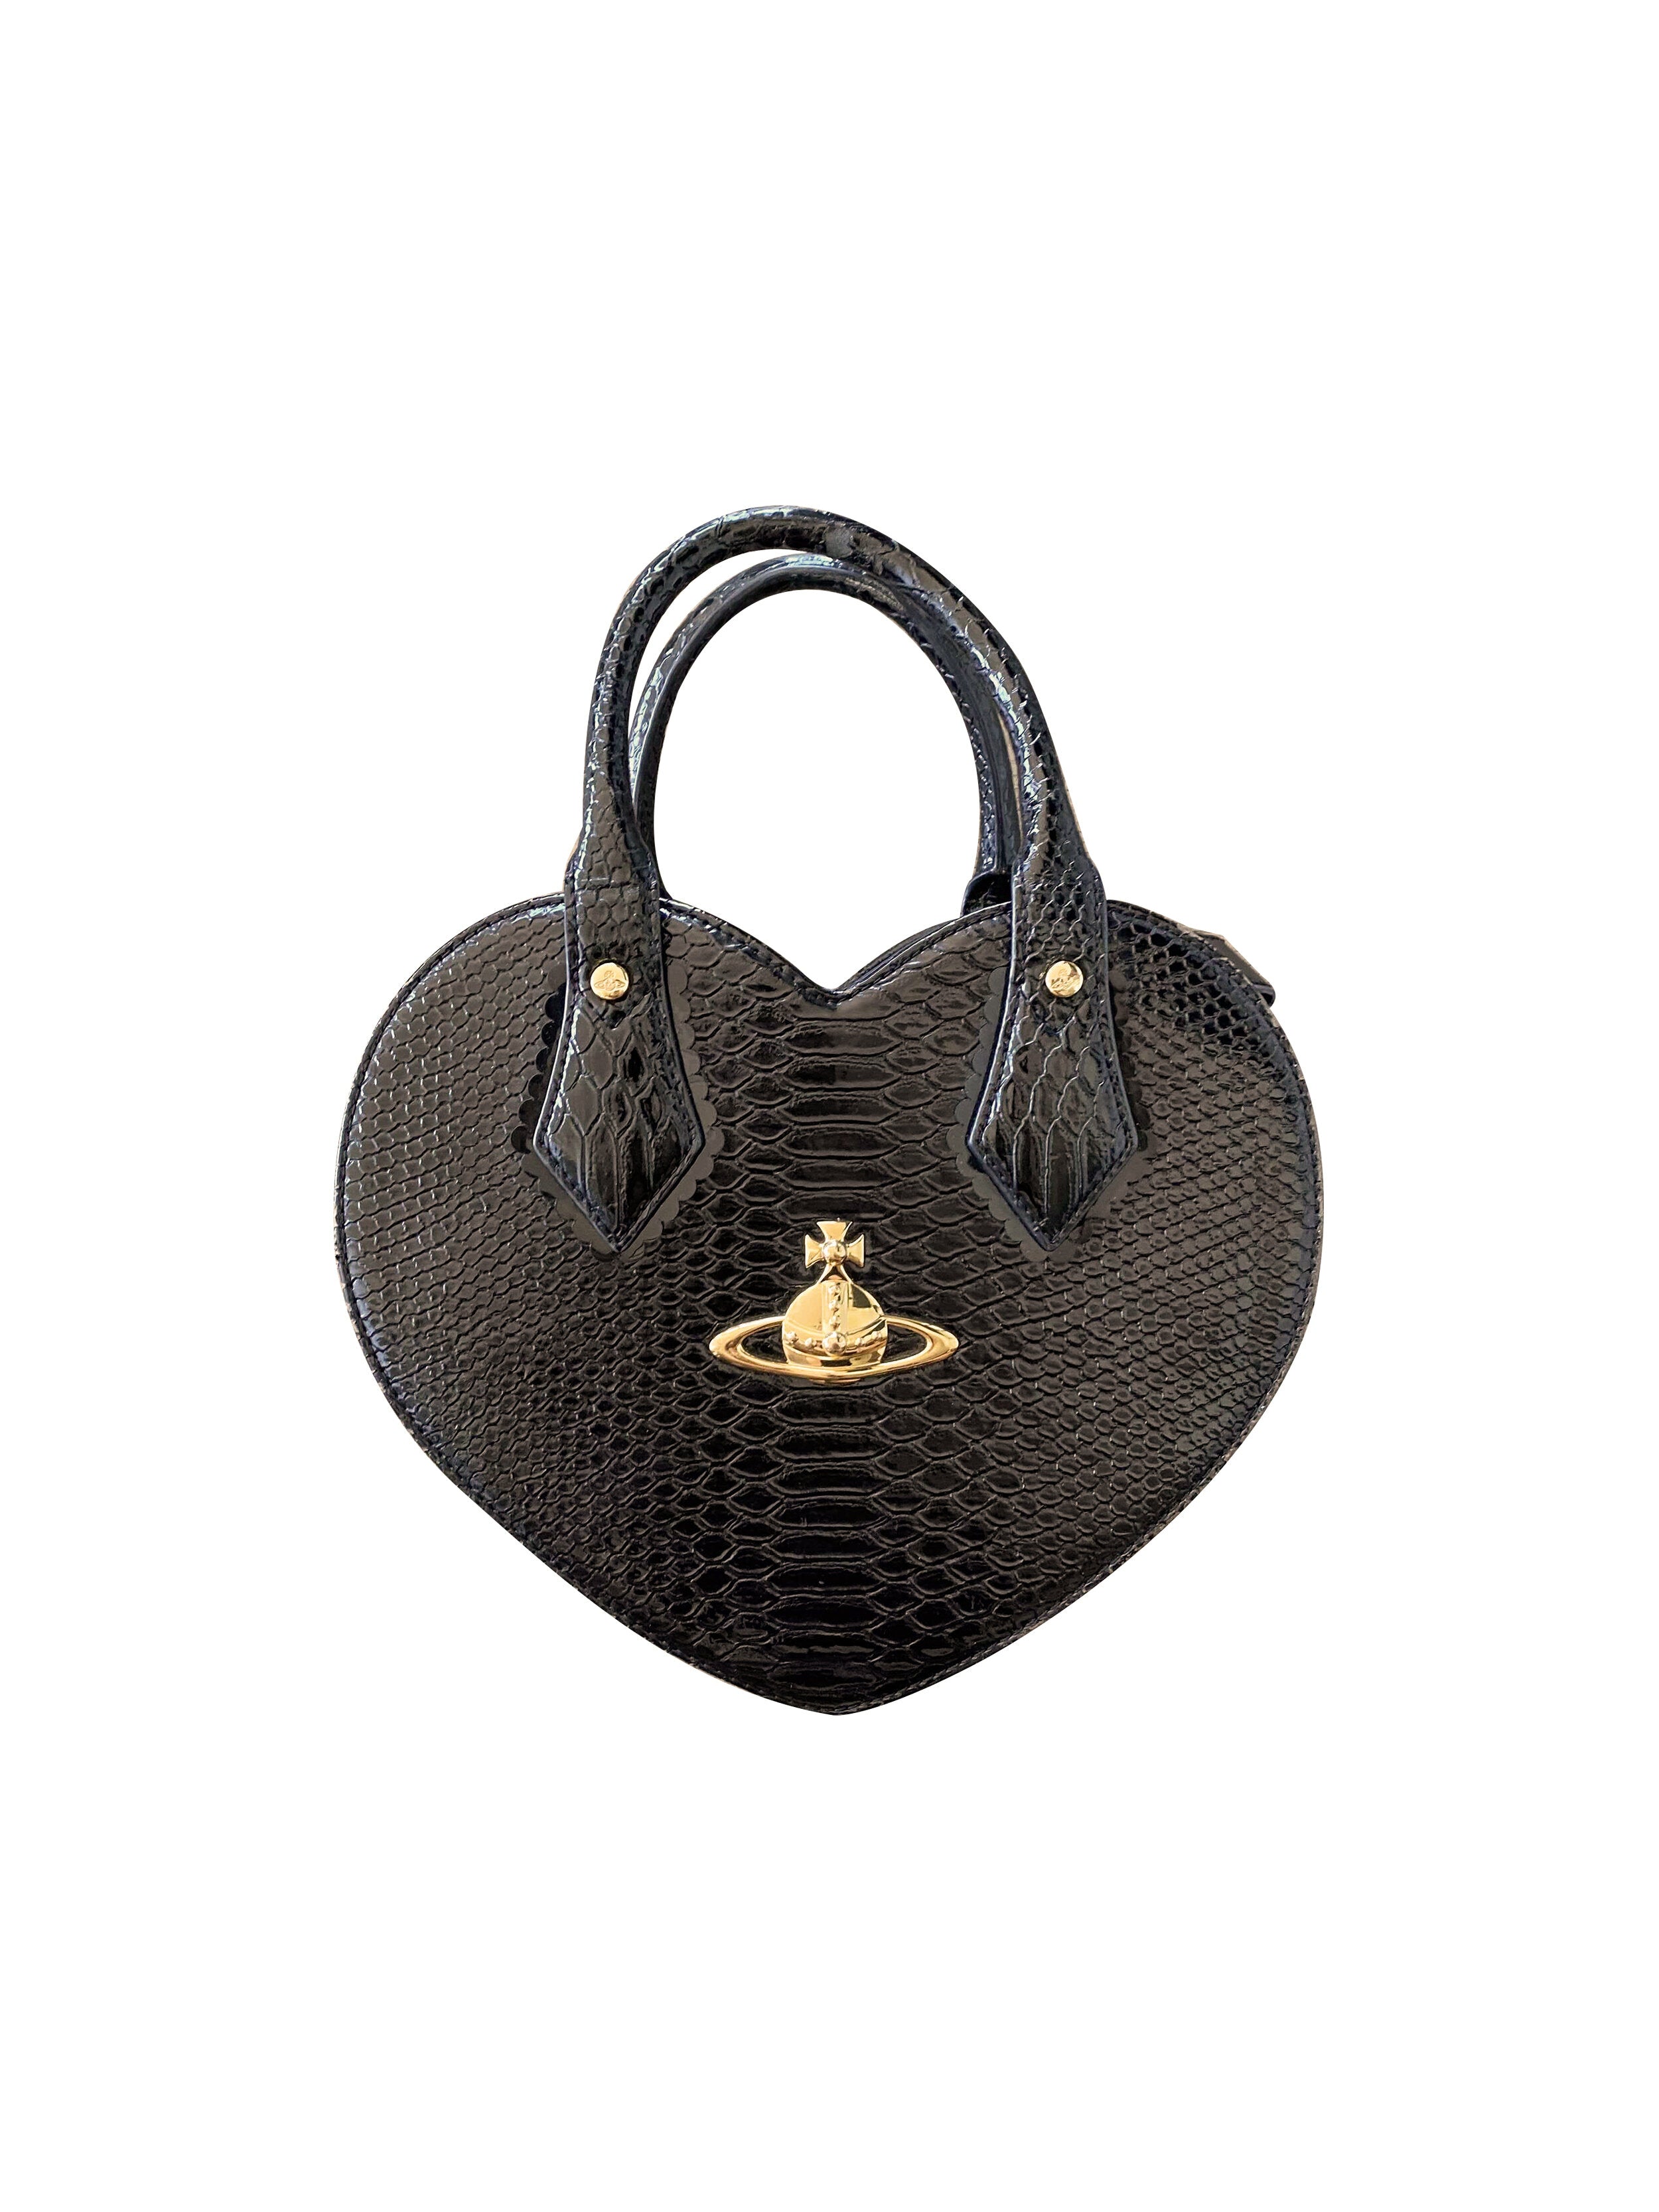 Chancery Heart patent leather handbag